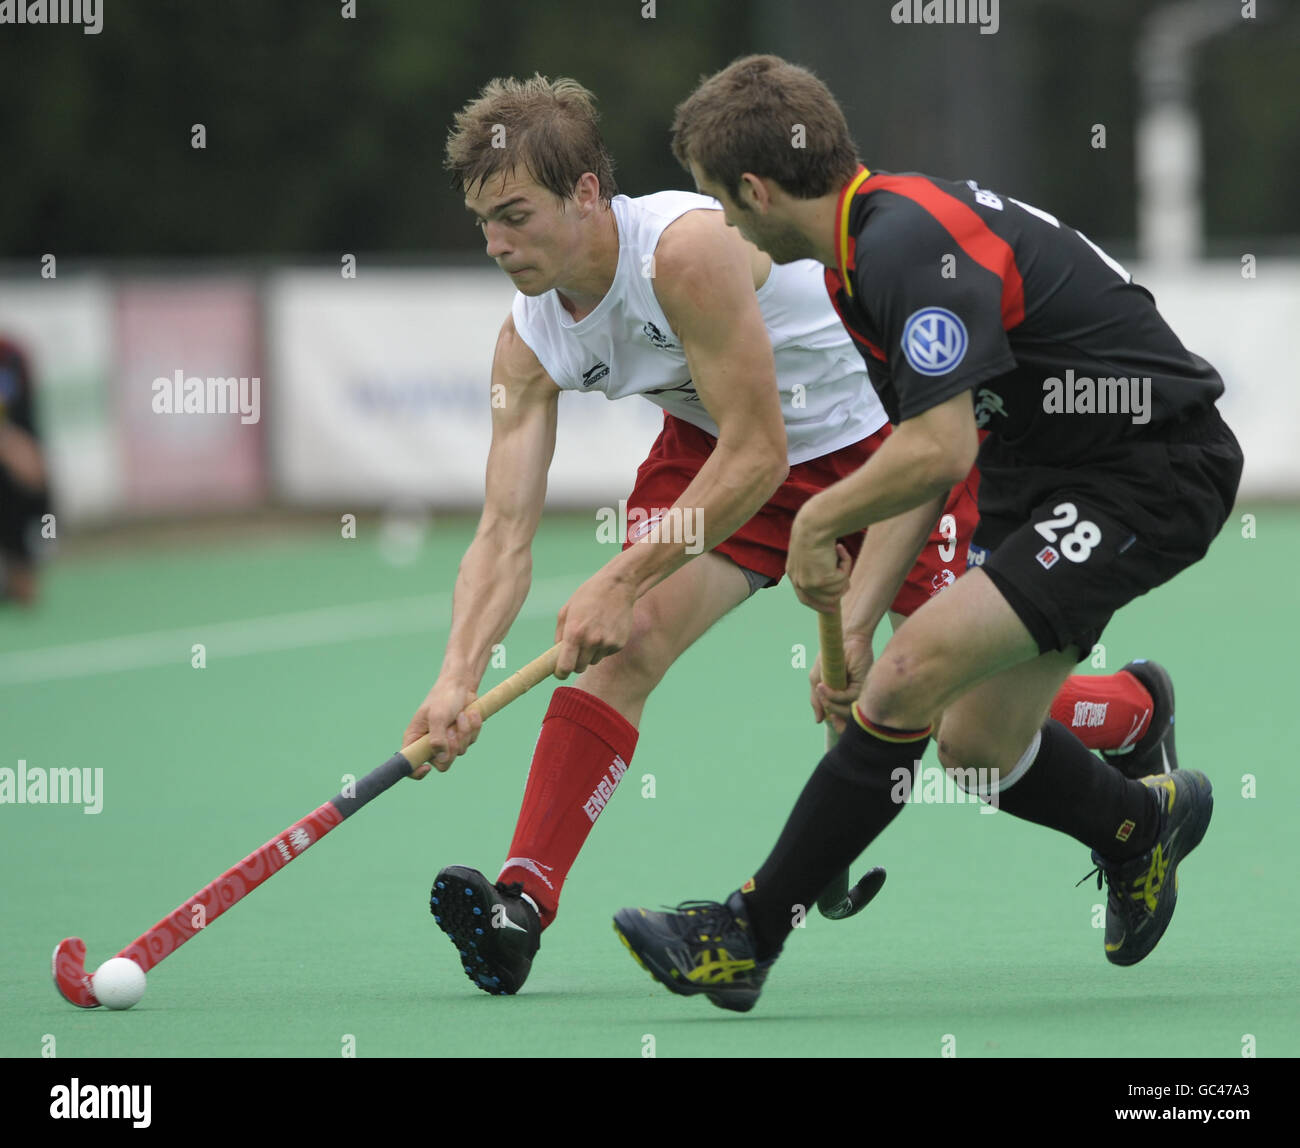 Hockey - U21 International - England v belgium - Canterbury Hockey Club. England's James Blackwell (left) Stock Photo